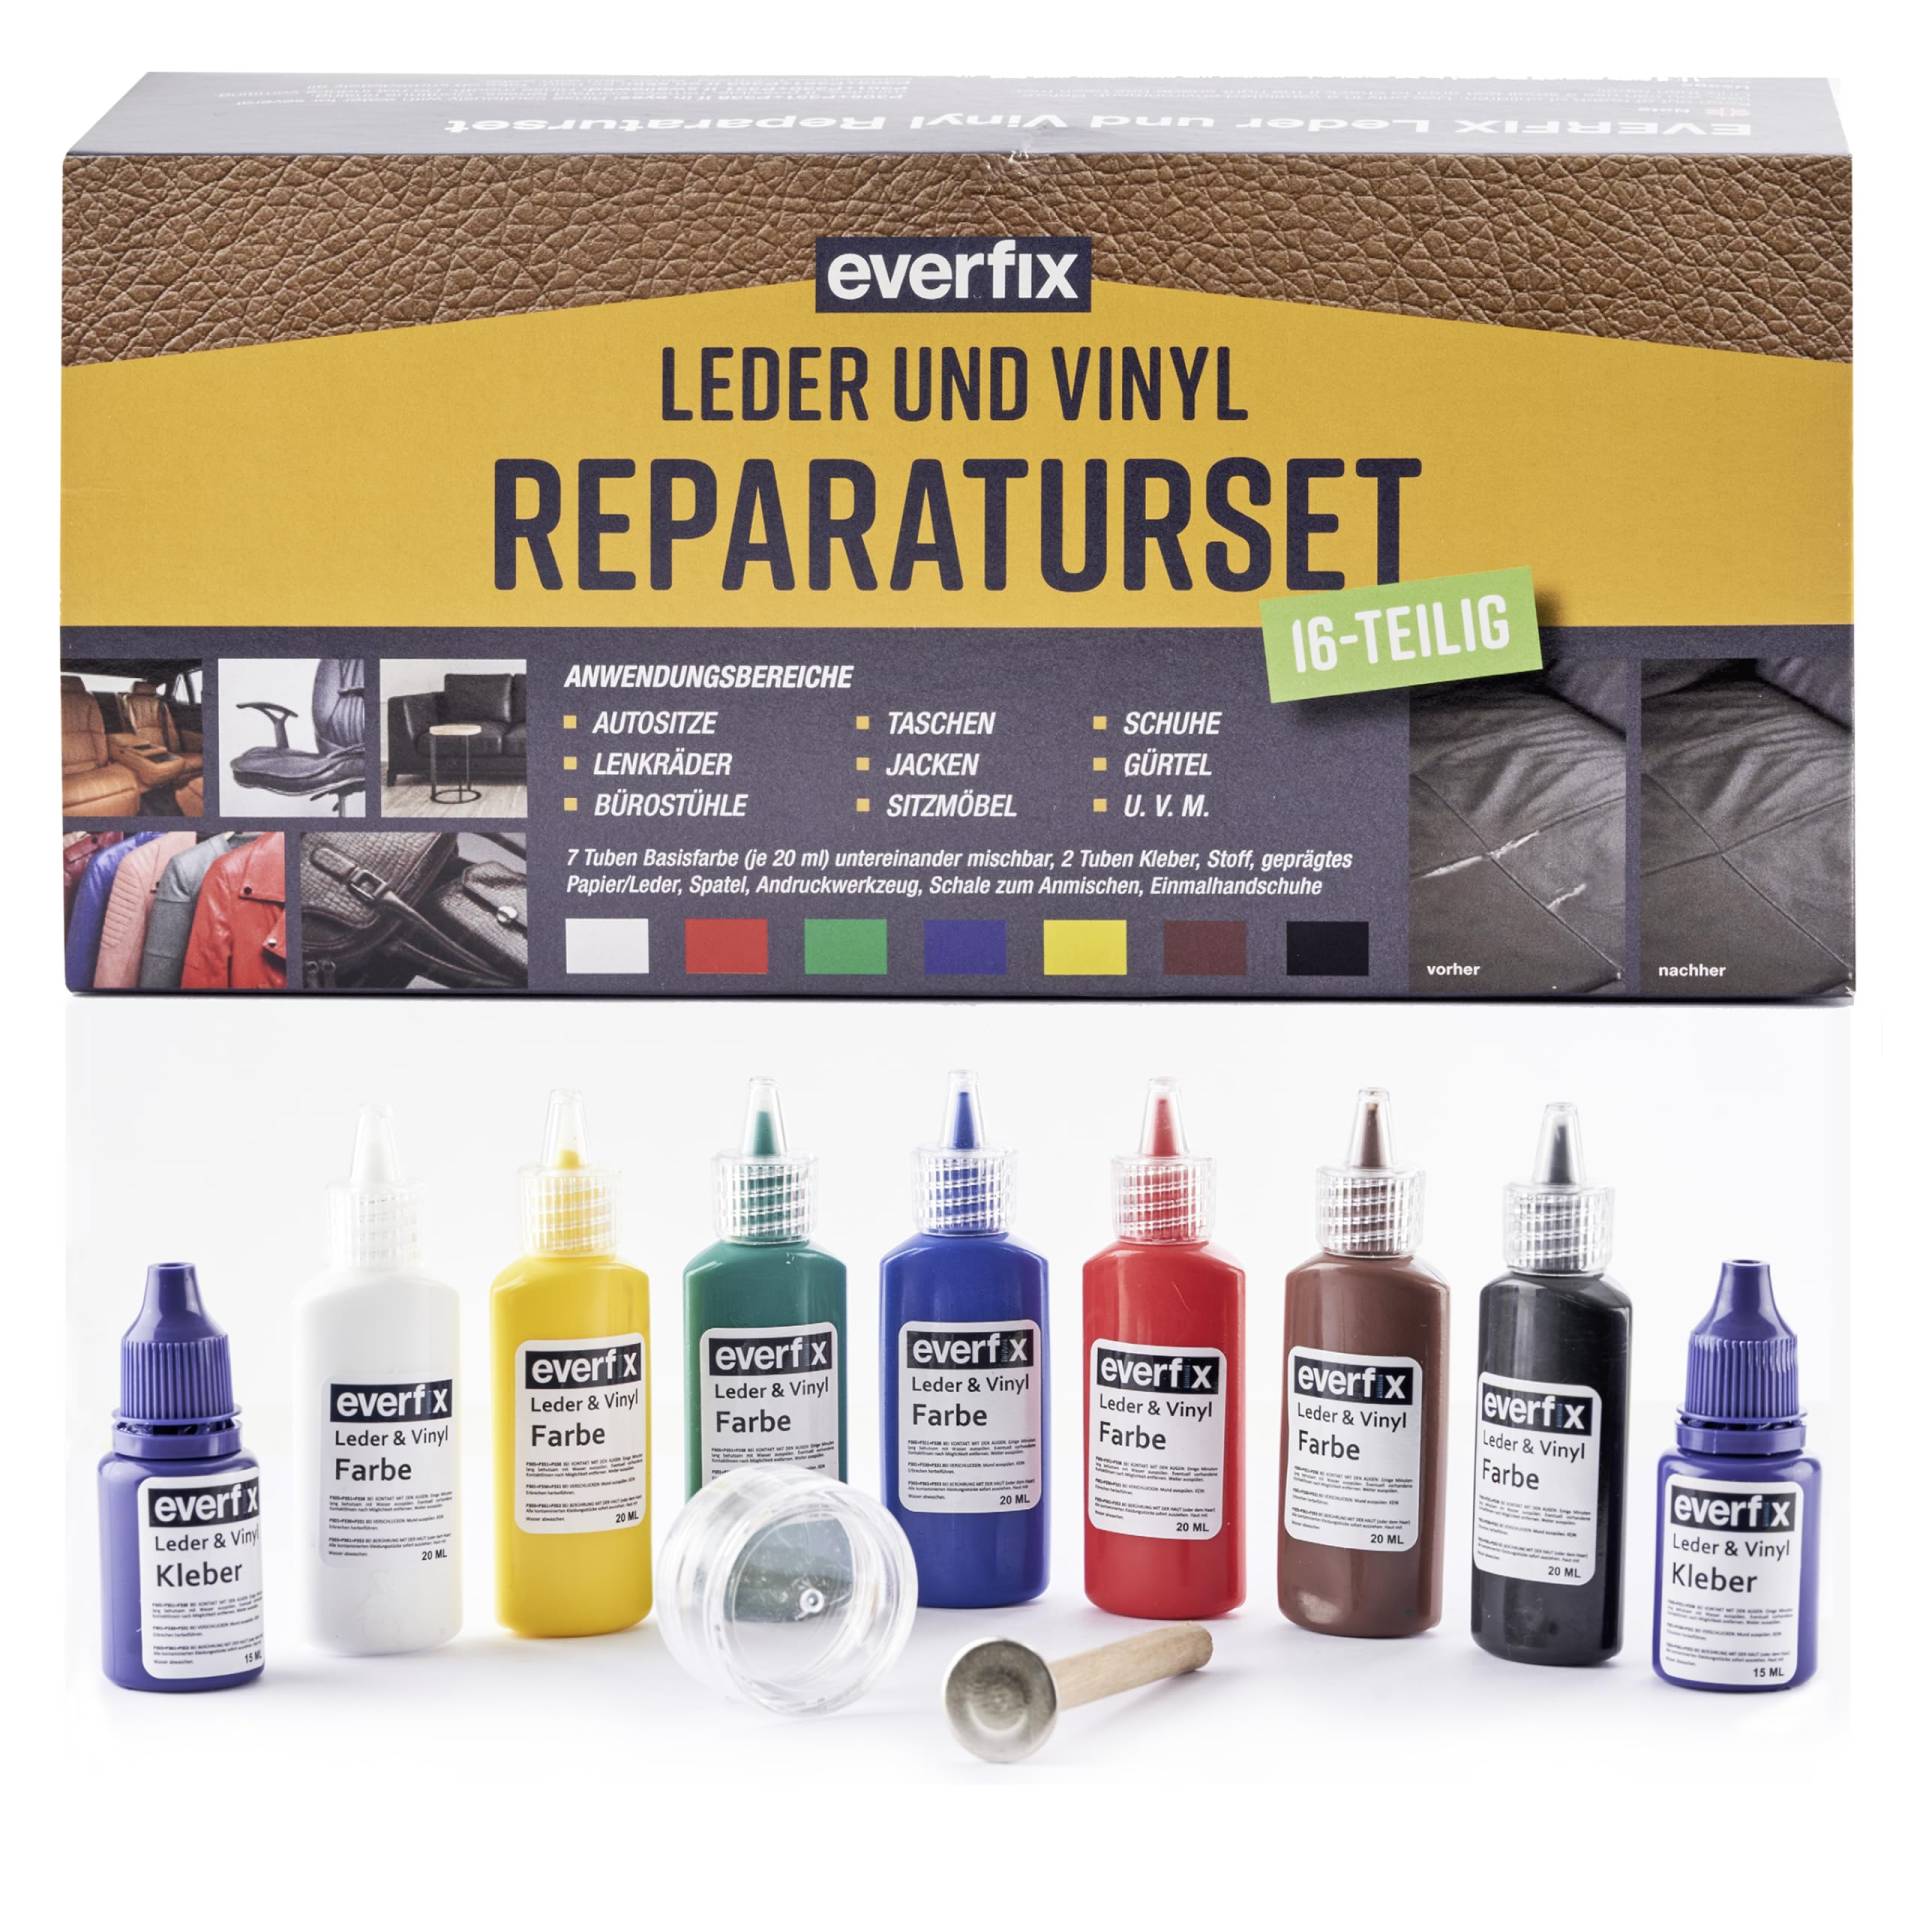 Everfix Leder & Vinyl Reparaturset (16-teilig) zur Reparatur von Leder und Kunstleder von Everfix